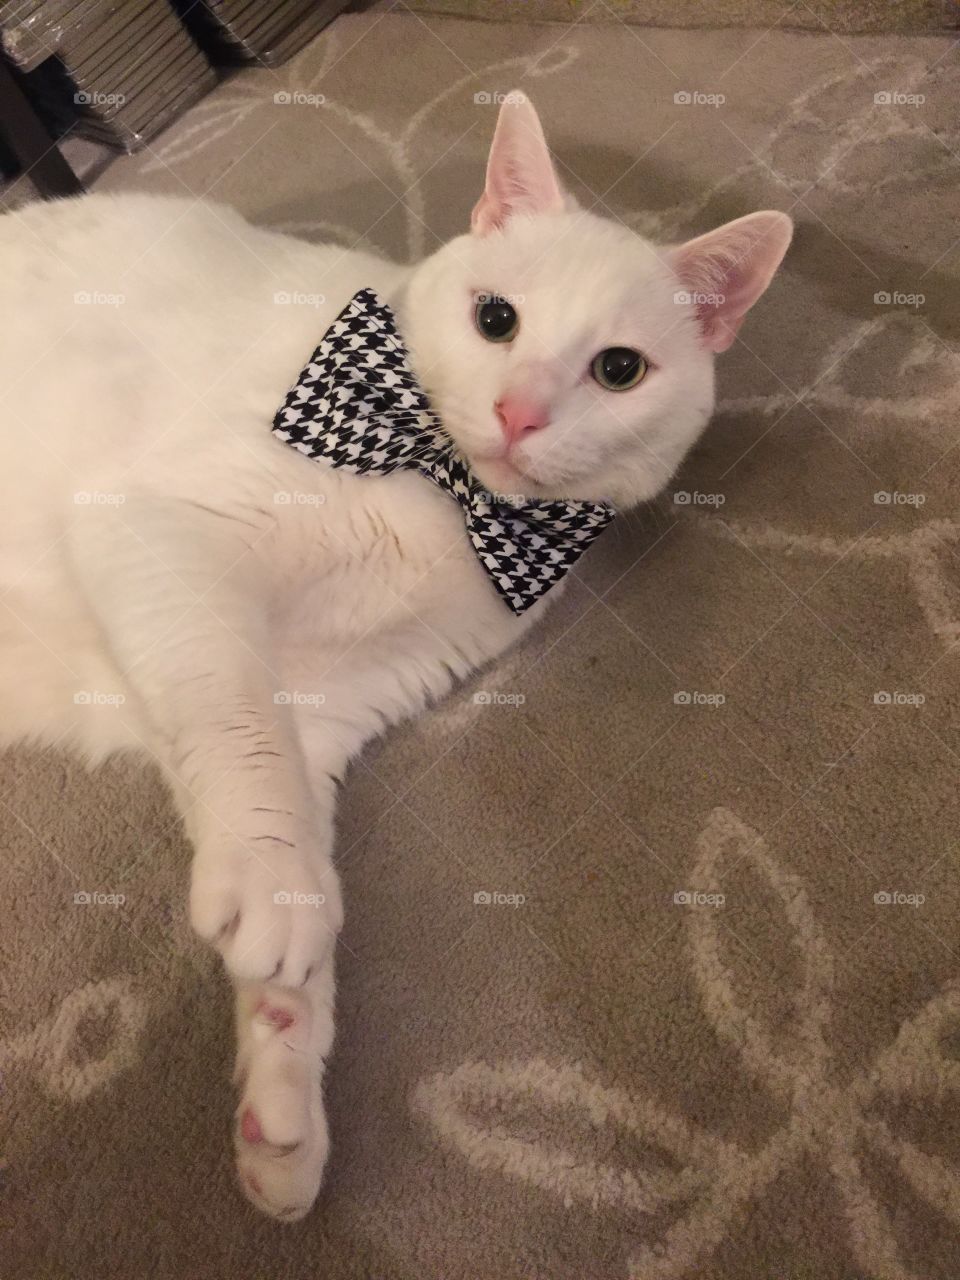 Bow tie kitty cat!